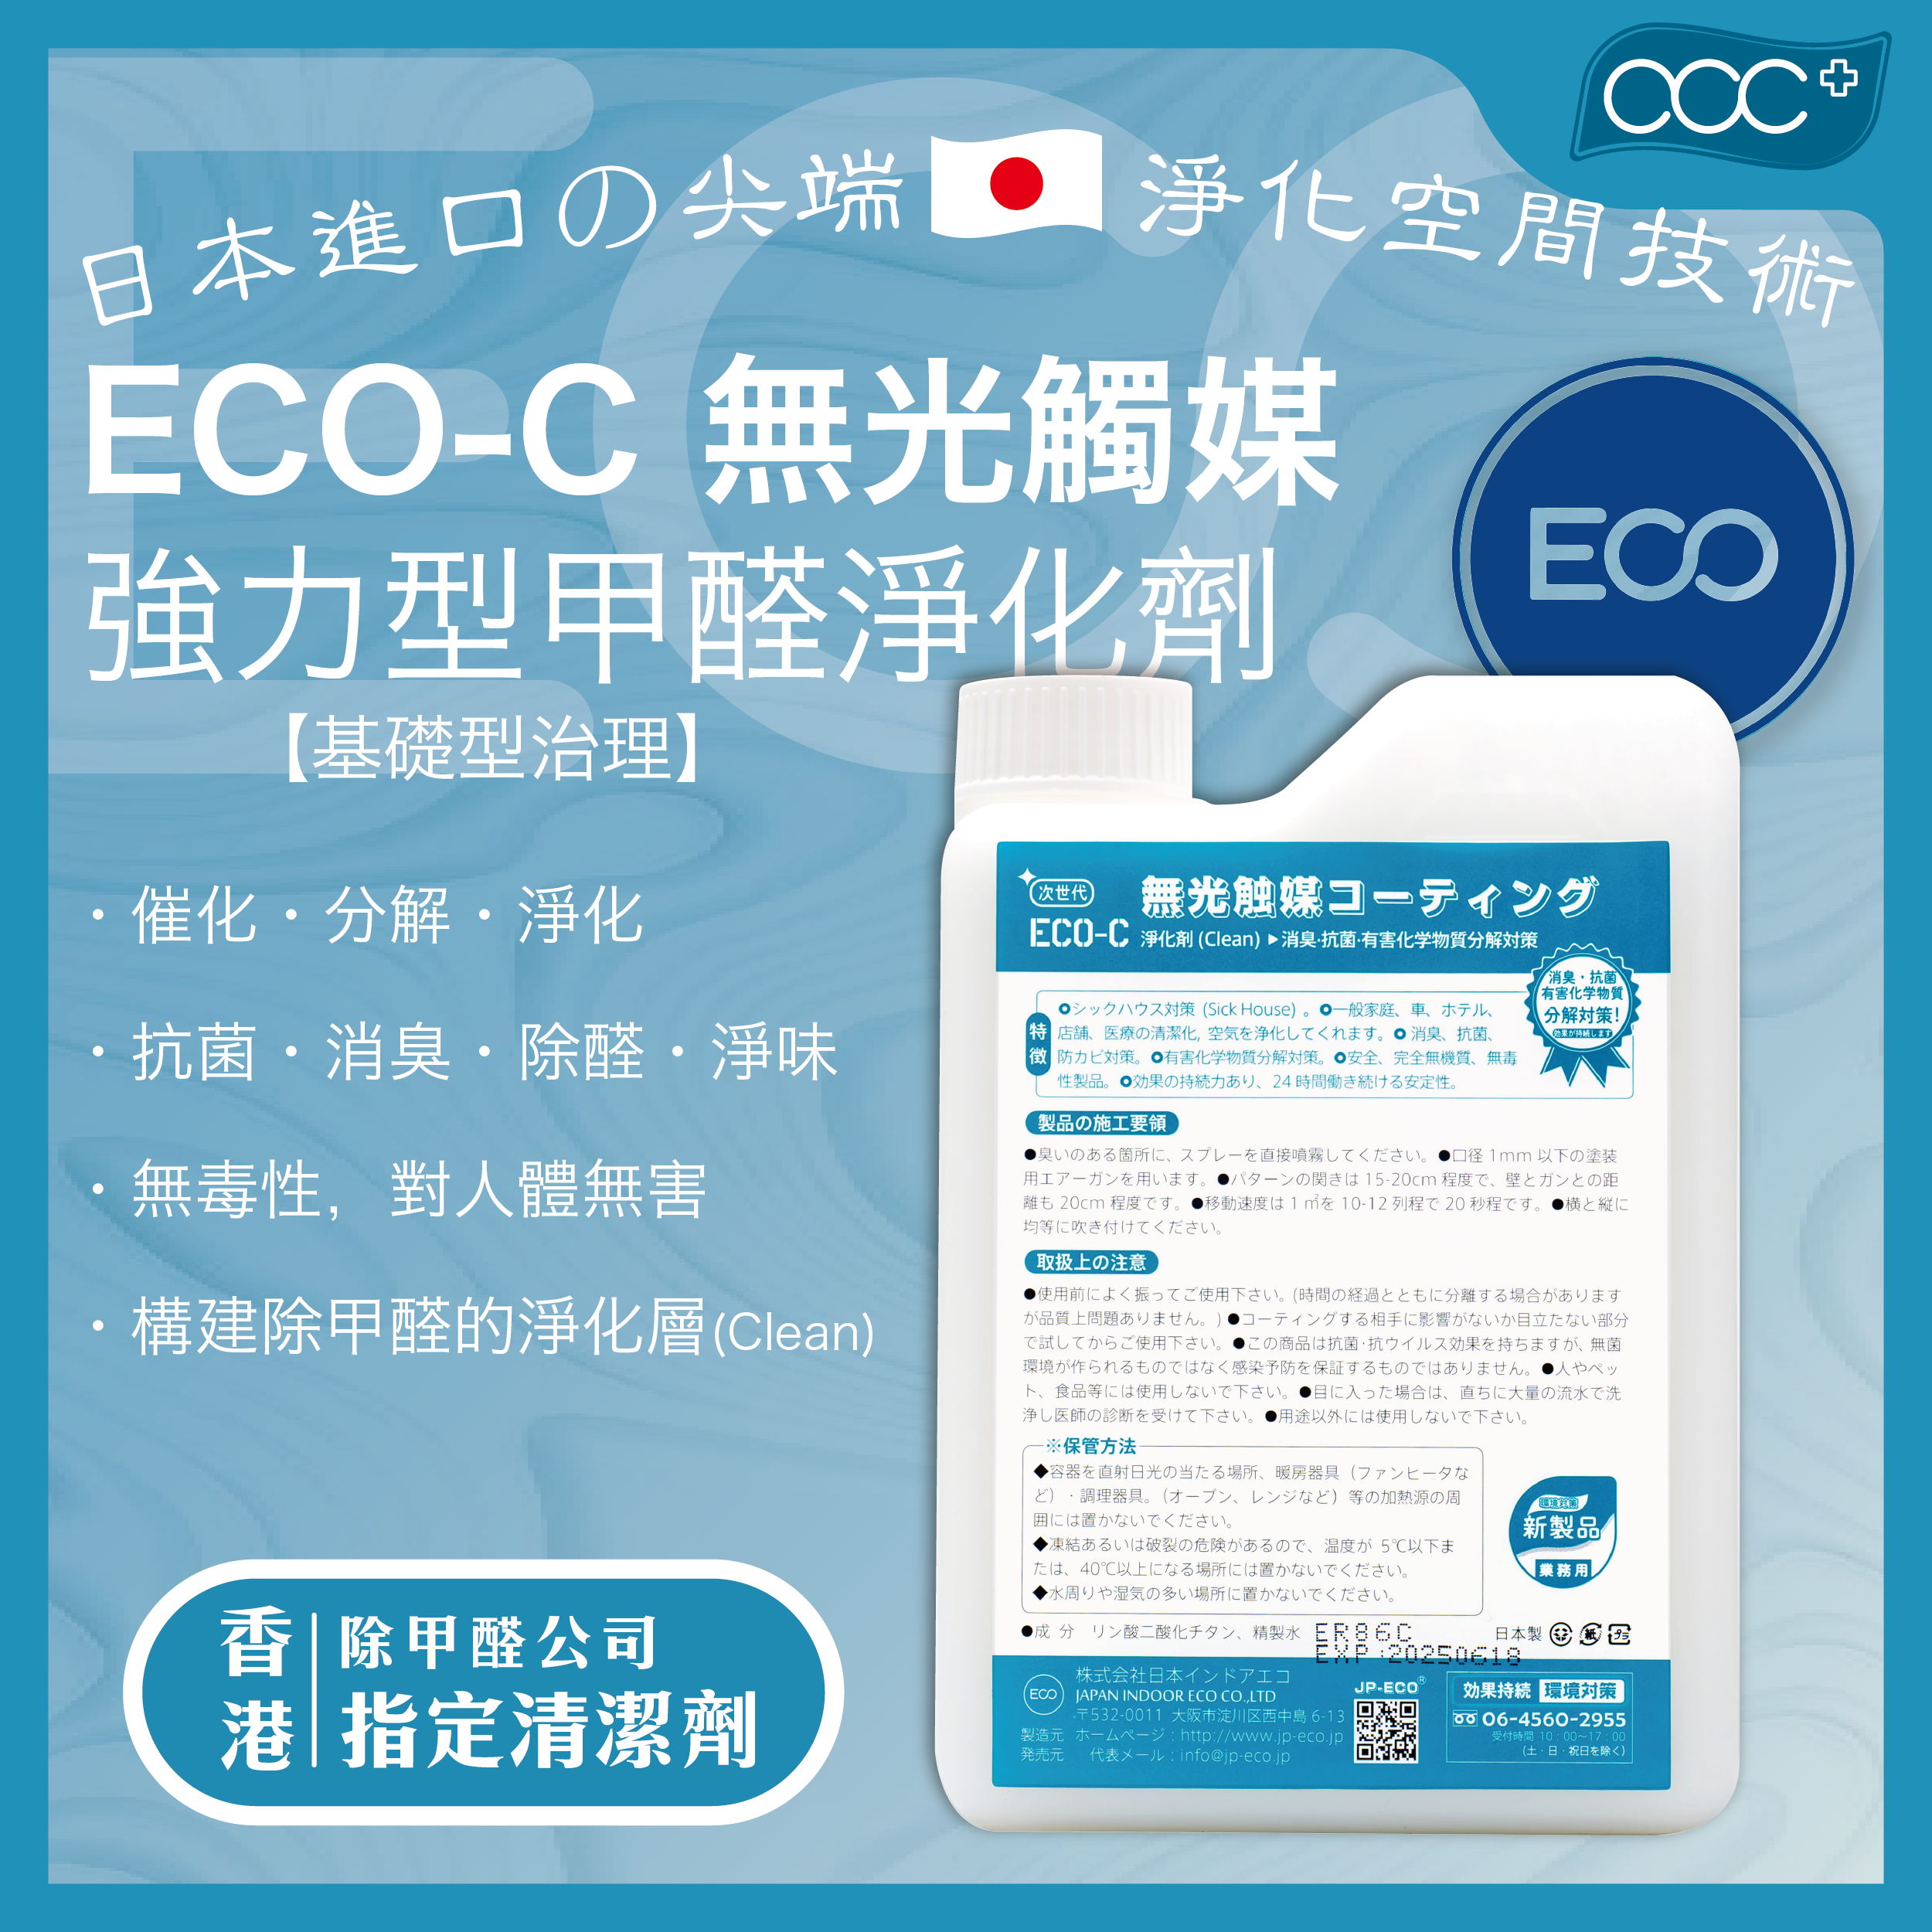 JP-ECO [Japanese original] ECO-C non-photocatalyst base layer ground protection agent (1kg) formaldehyde scavenger powerful purification spray